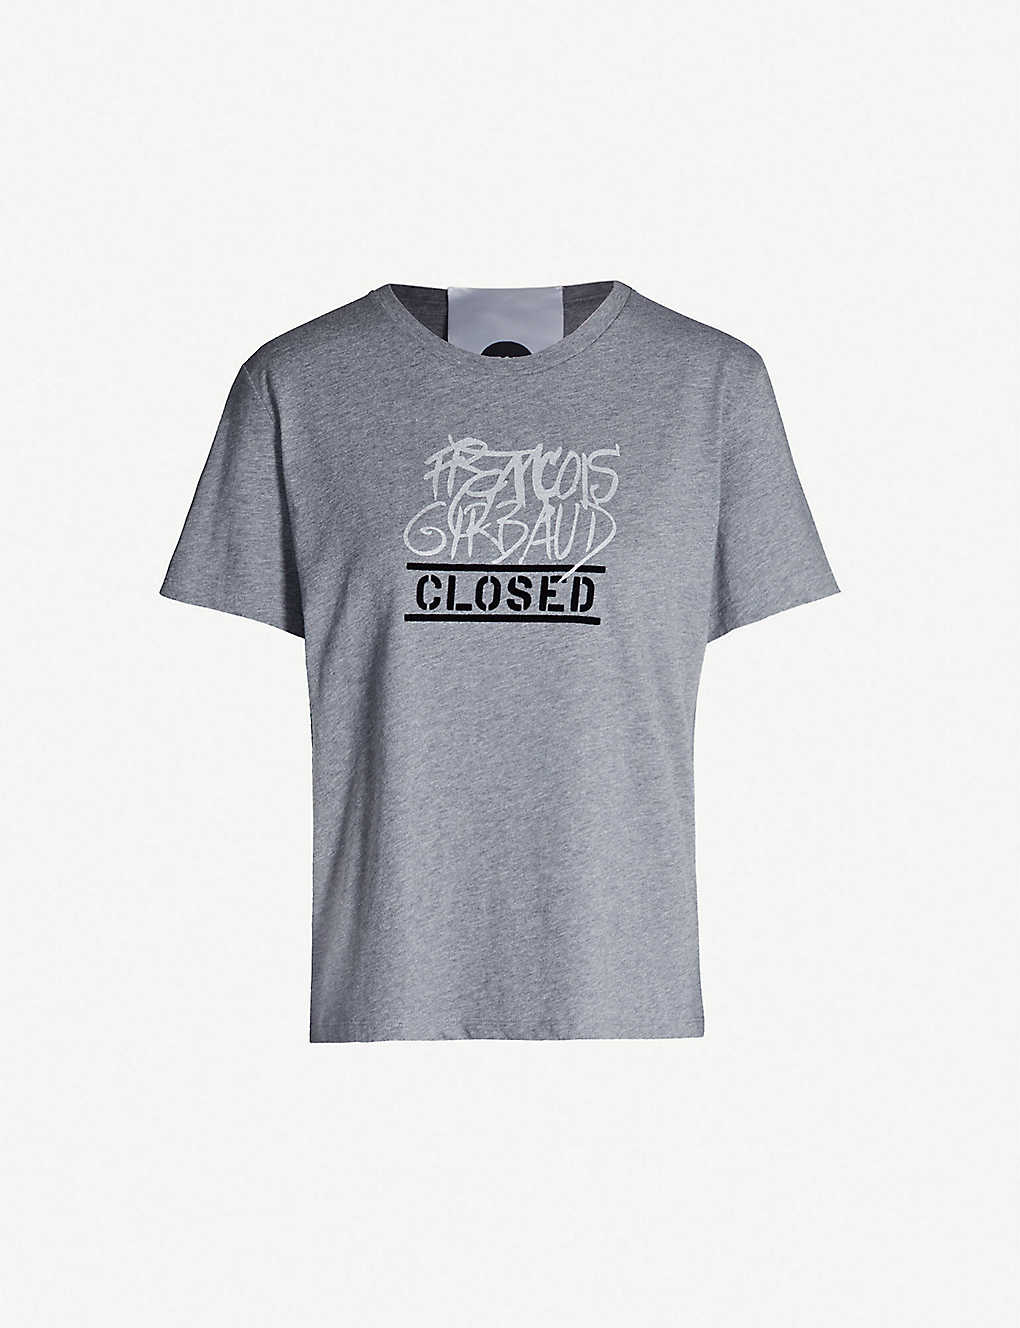 Girbaud Logo - CLOSED - Closed x Girbaud logo-print cotton-jersey T-shirt ...